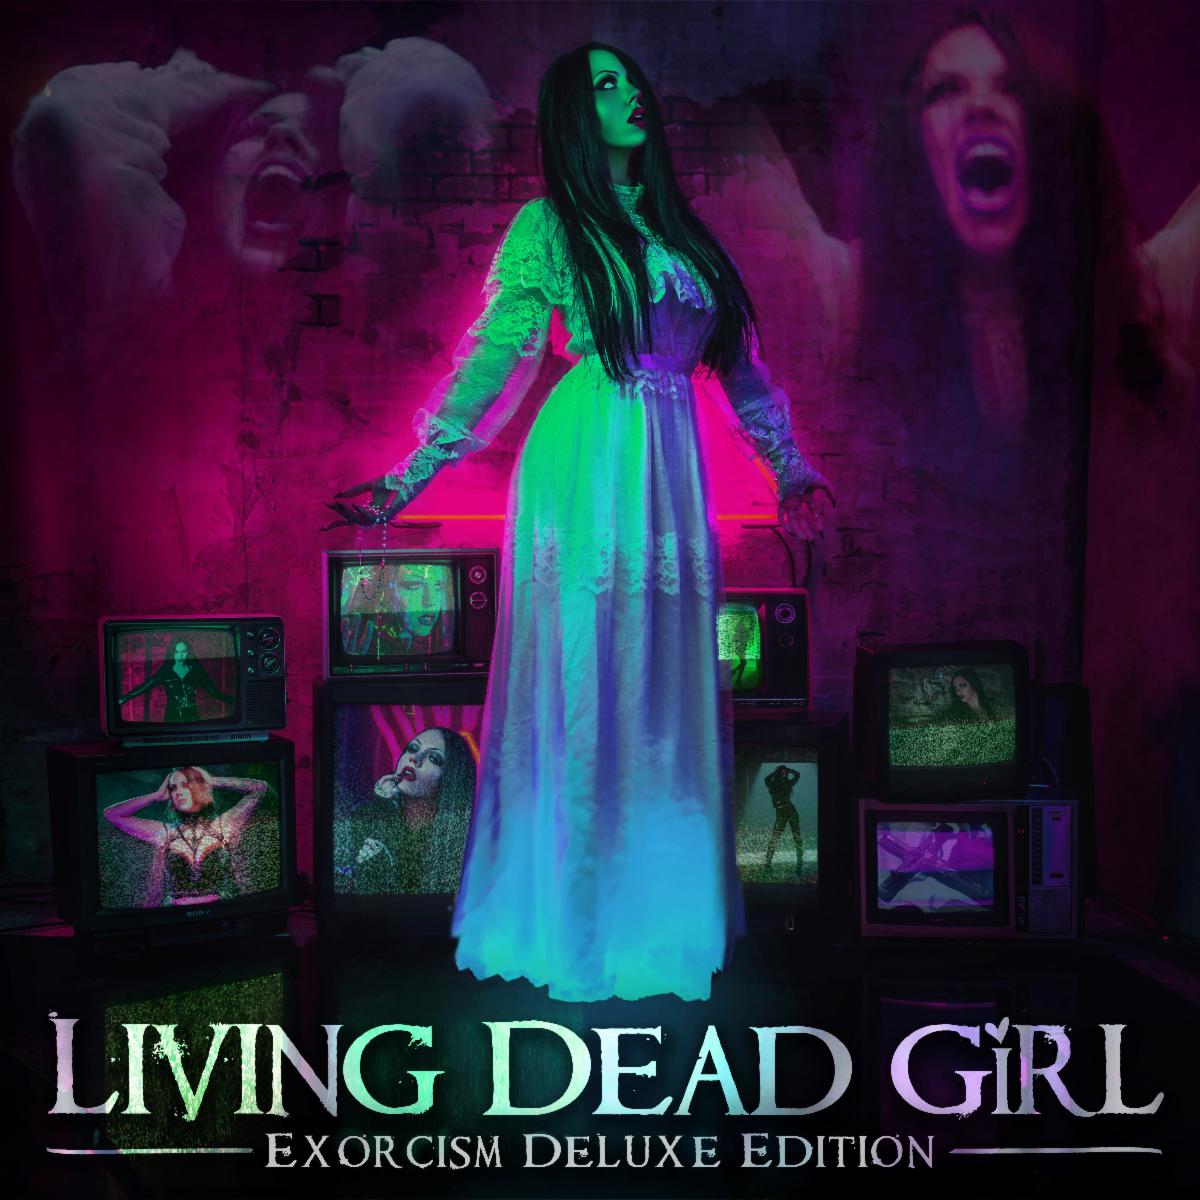 LIVING DEAD GIRL Premieres "Dysfunctional" at Metal Sucks